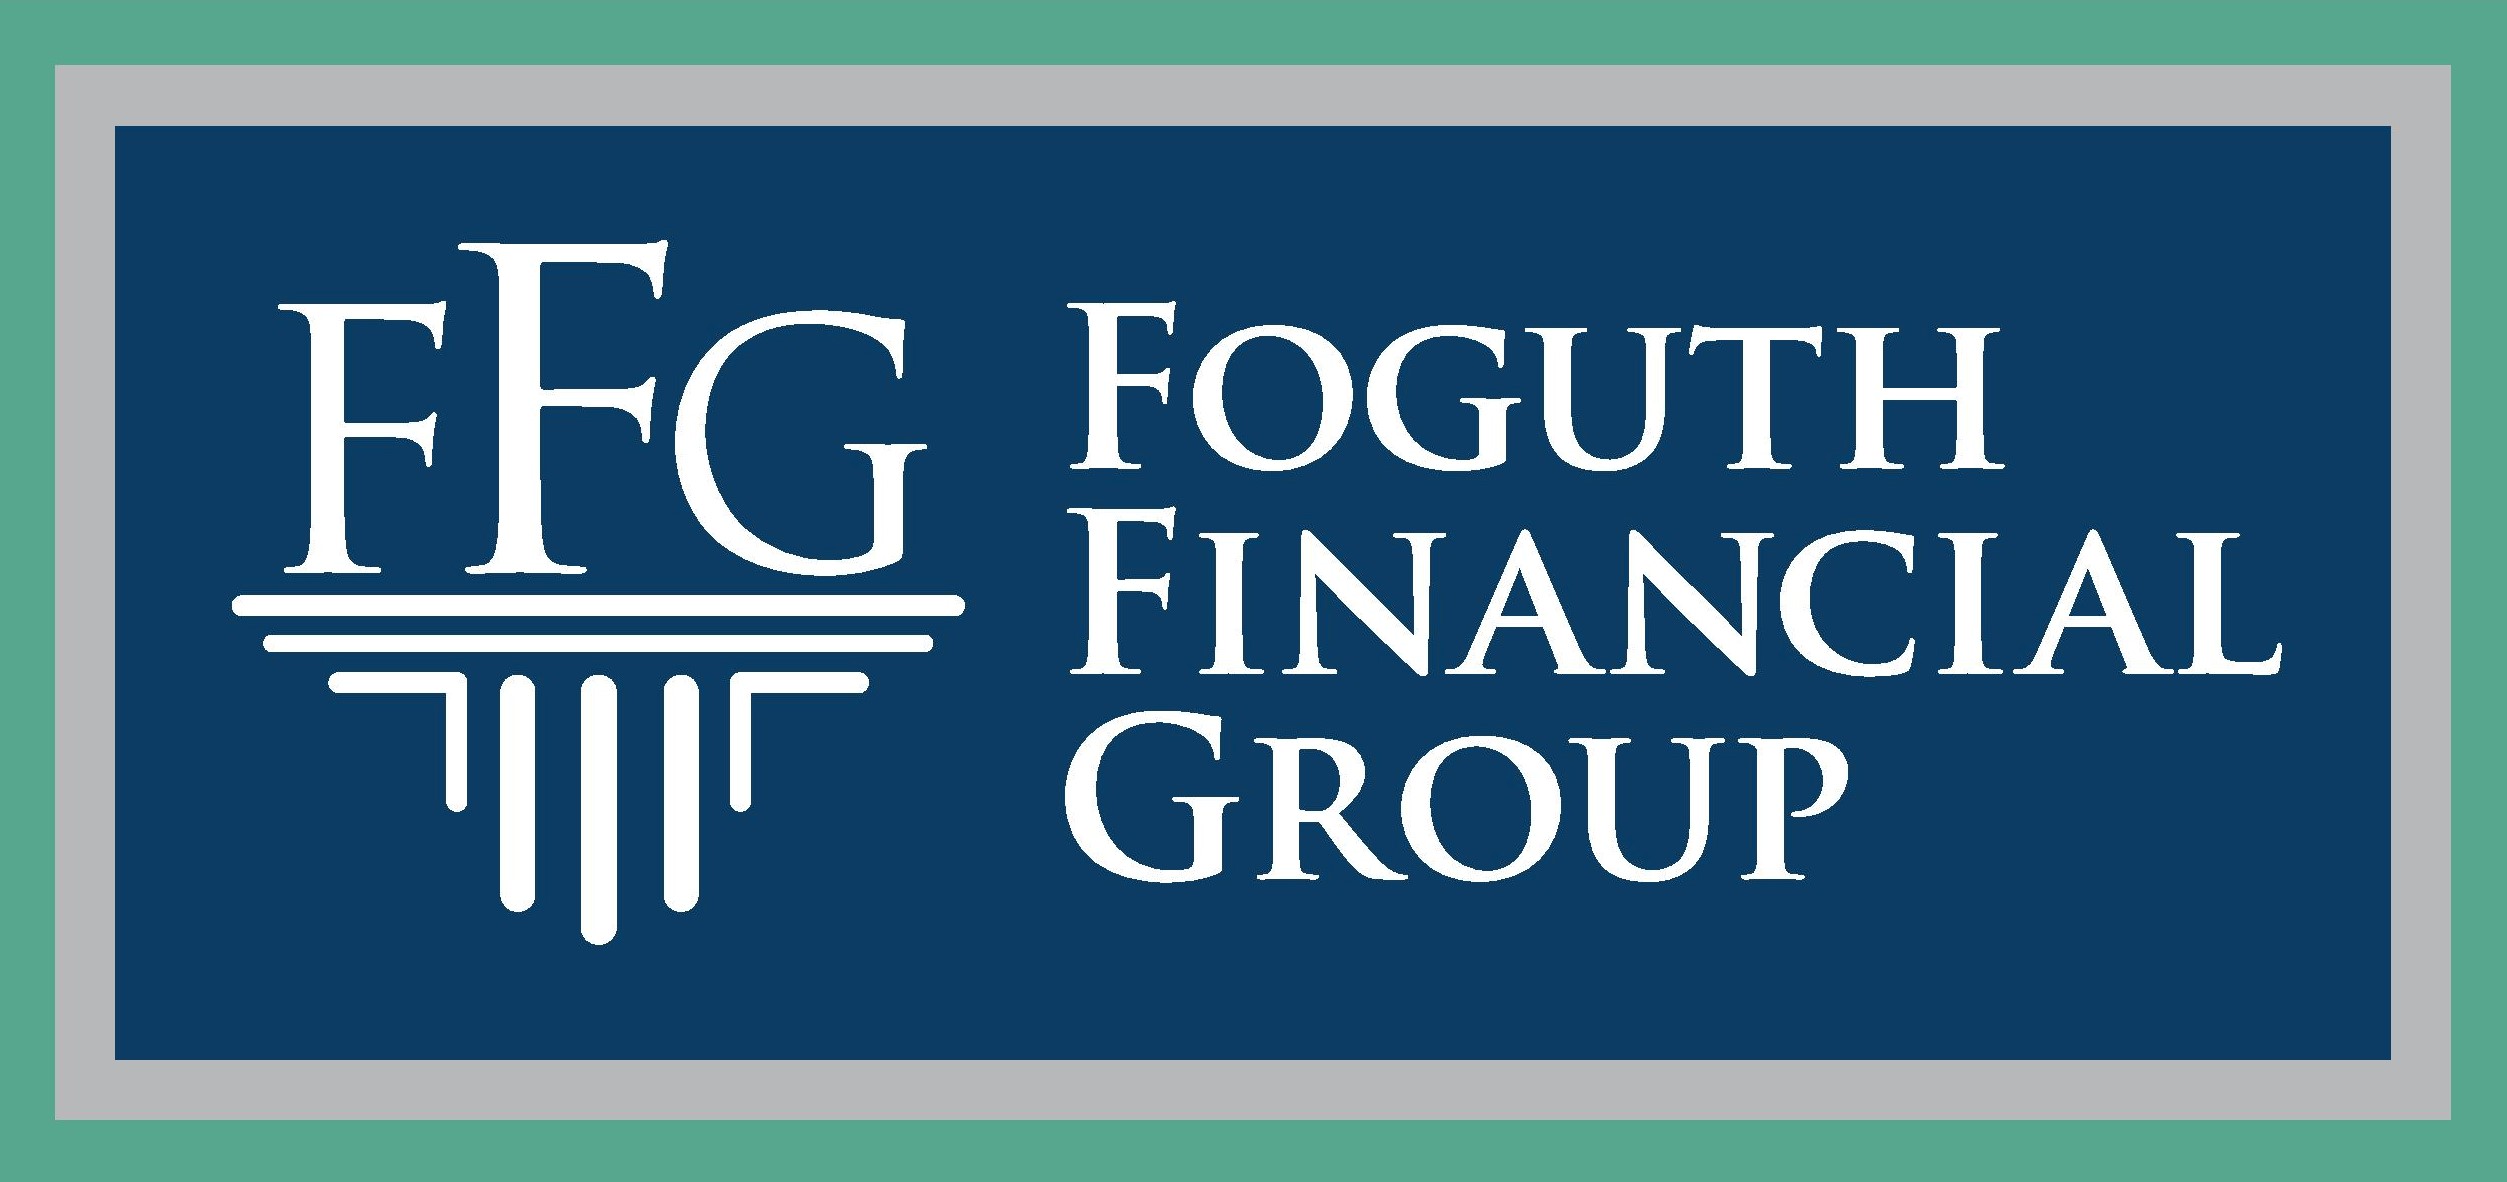 C4 Foguth Financial Group (Tier 4)